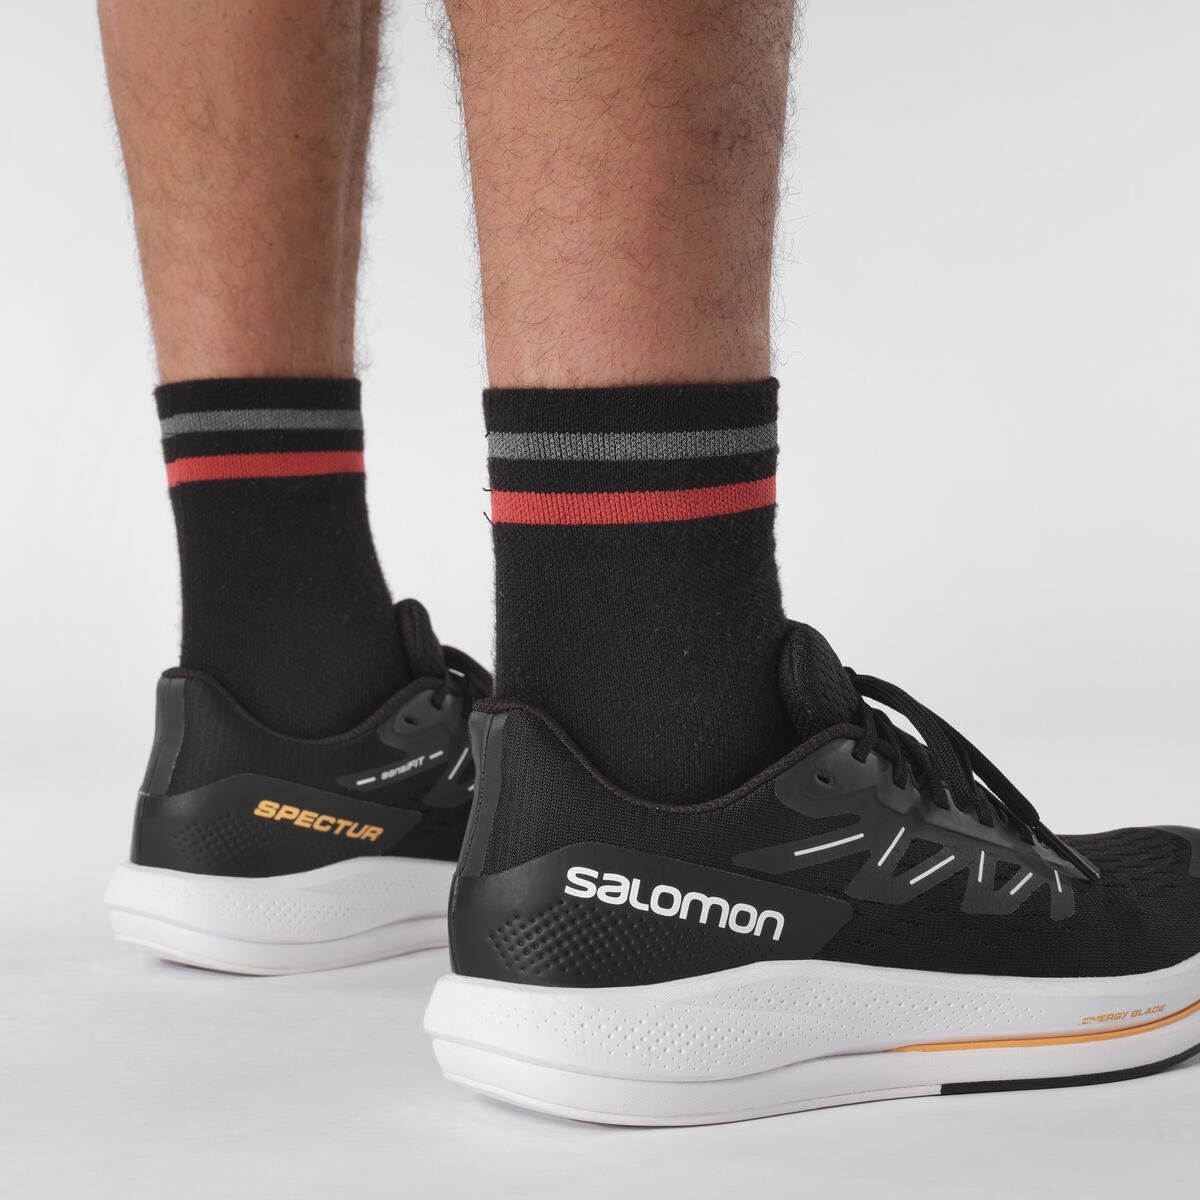 Topánky Salomon SPECTUR M - čierna